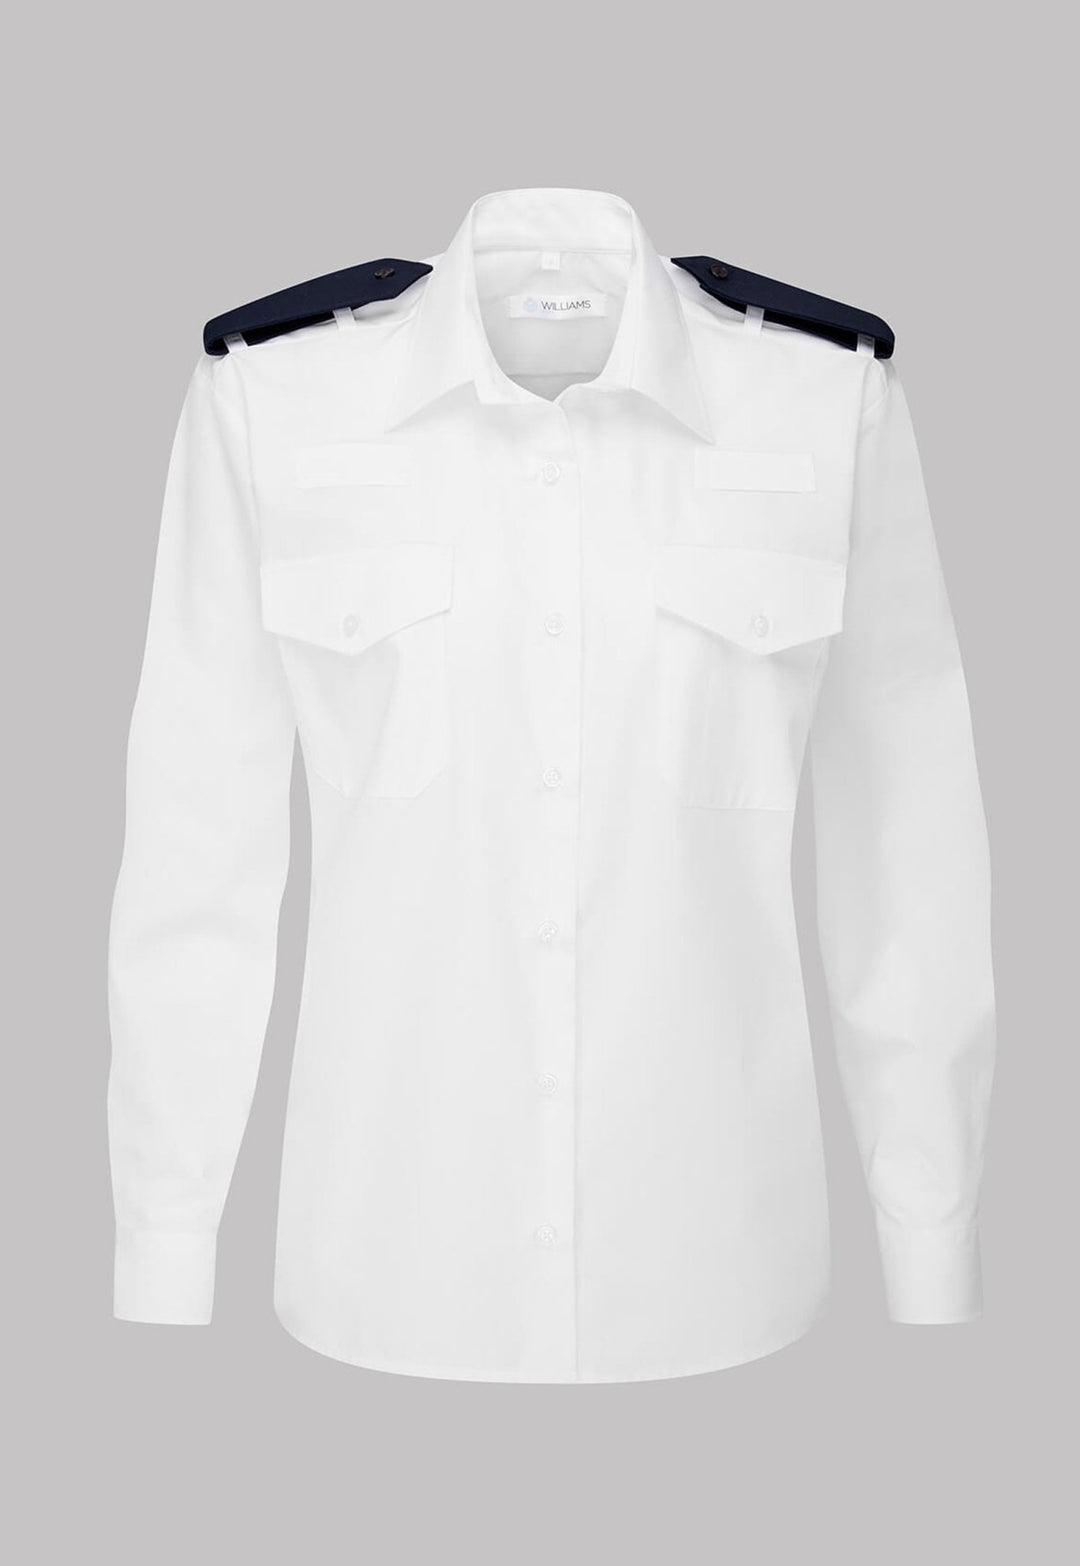 Women's Security Shirt Long Sleeve - The Work Uniform Company